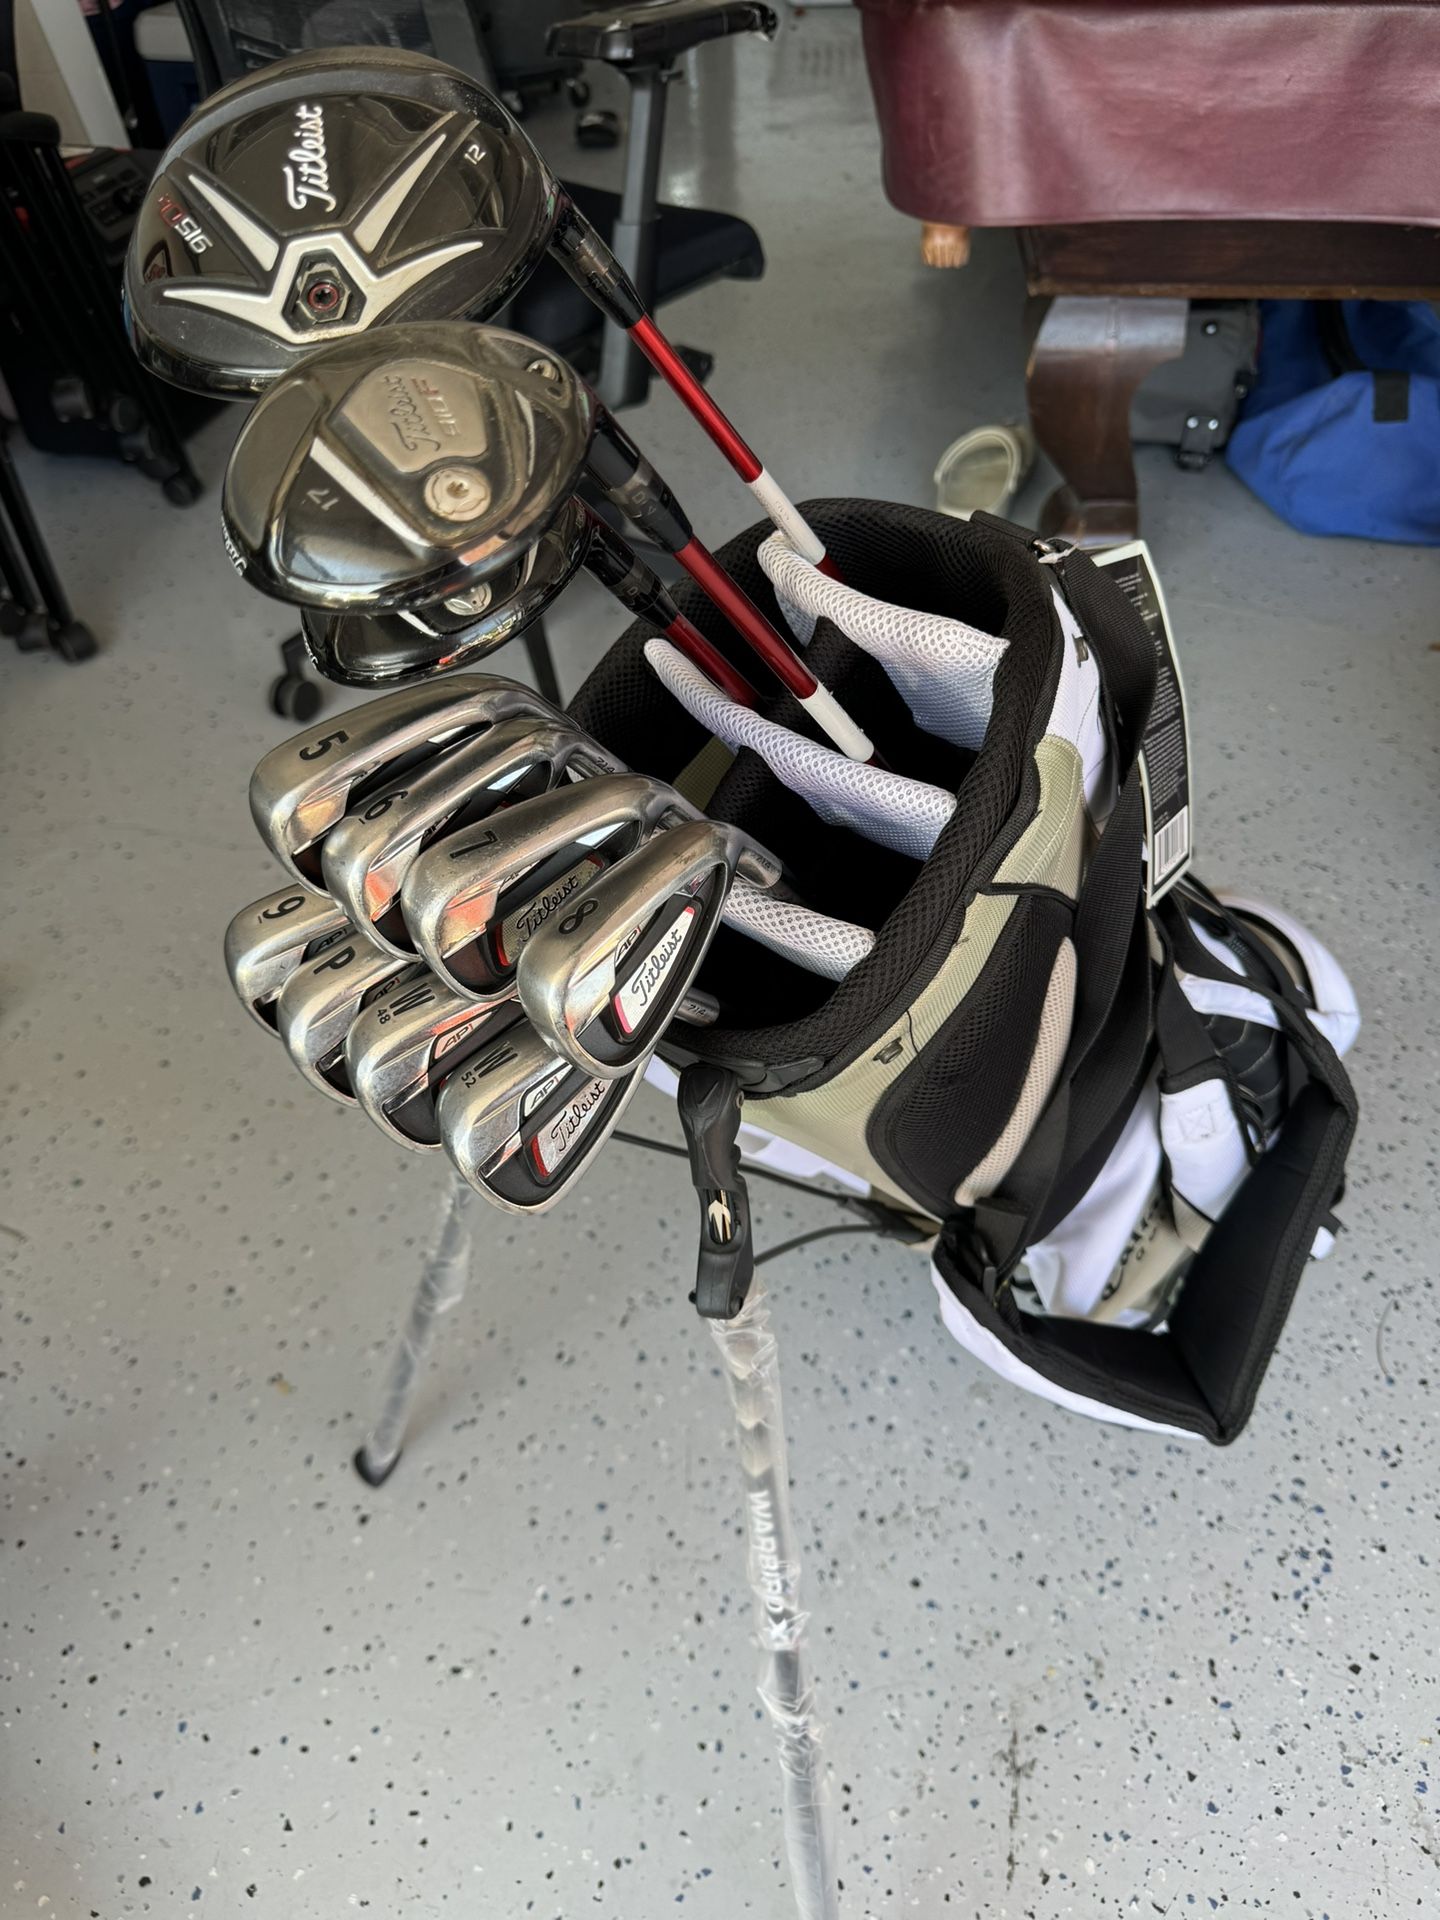 Full Titleist Golf Set And Brand New Callaway Bag